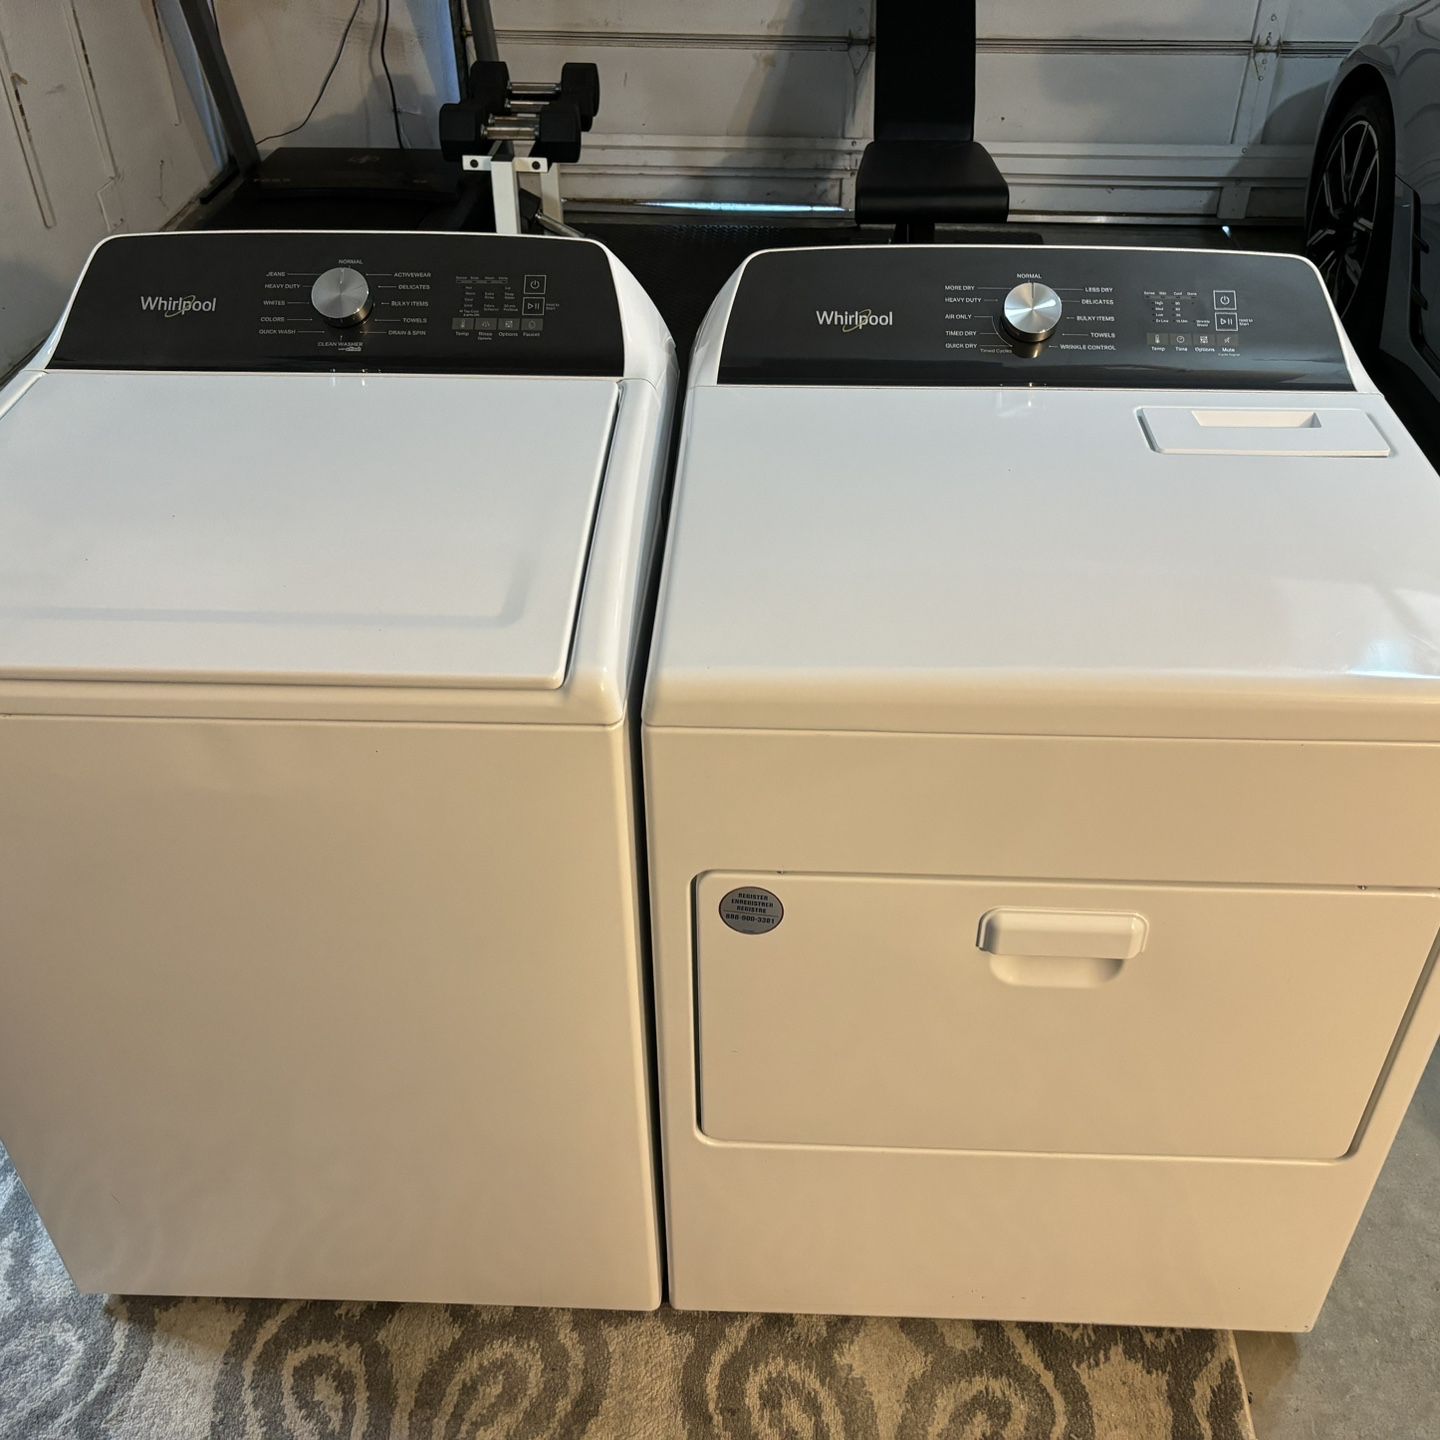 Whirpool Washer & Dryer (Like New)